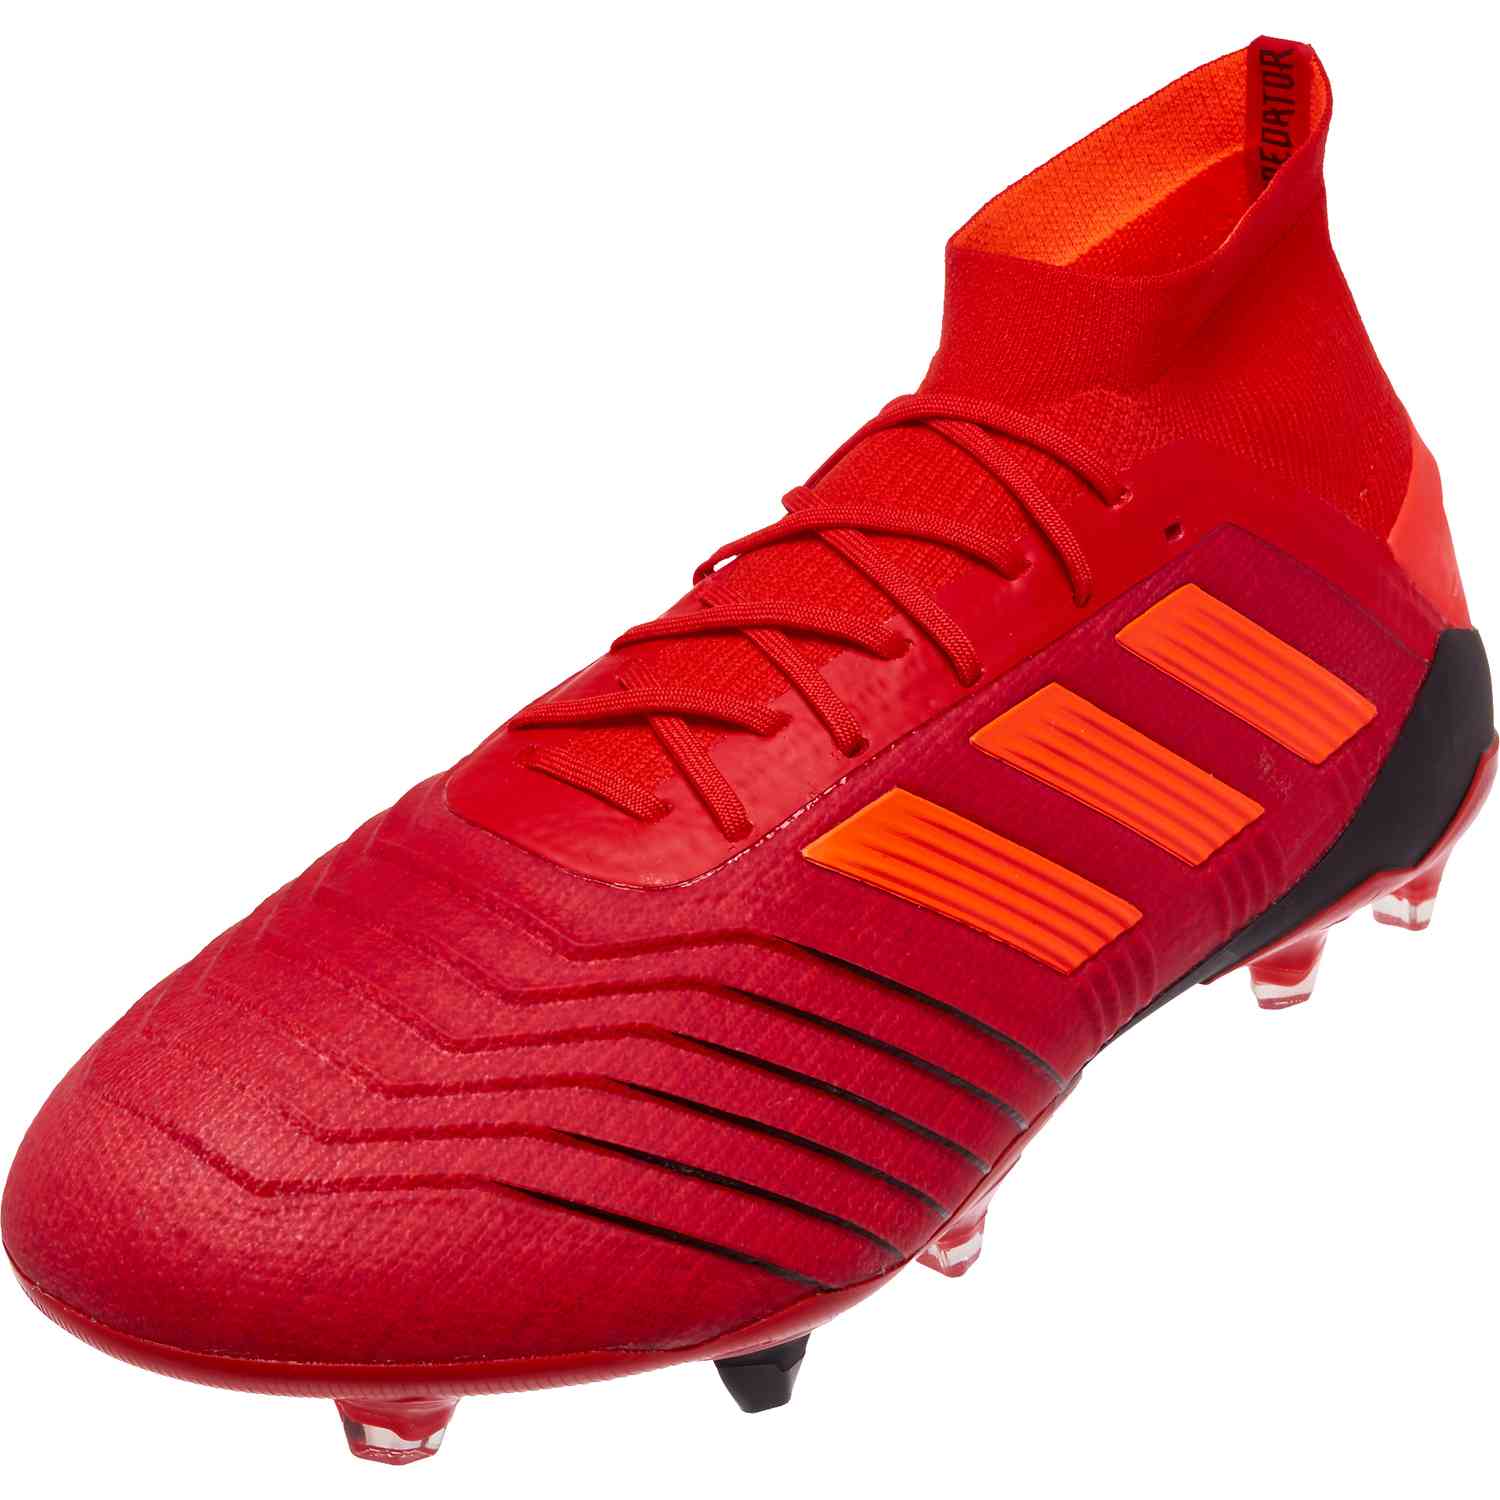 adidas men's predator 19.1 fg soccer cleats